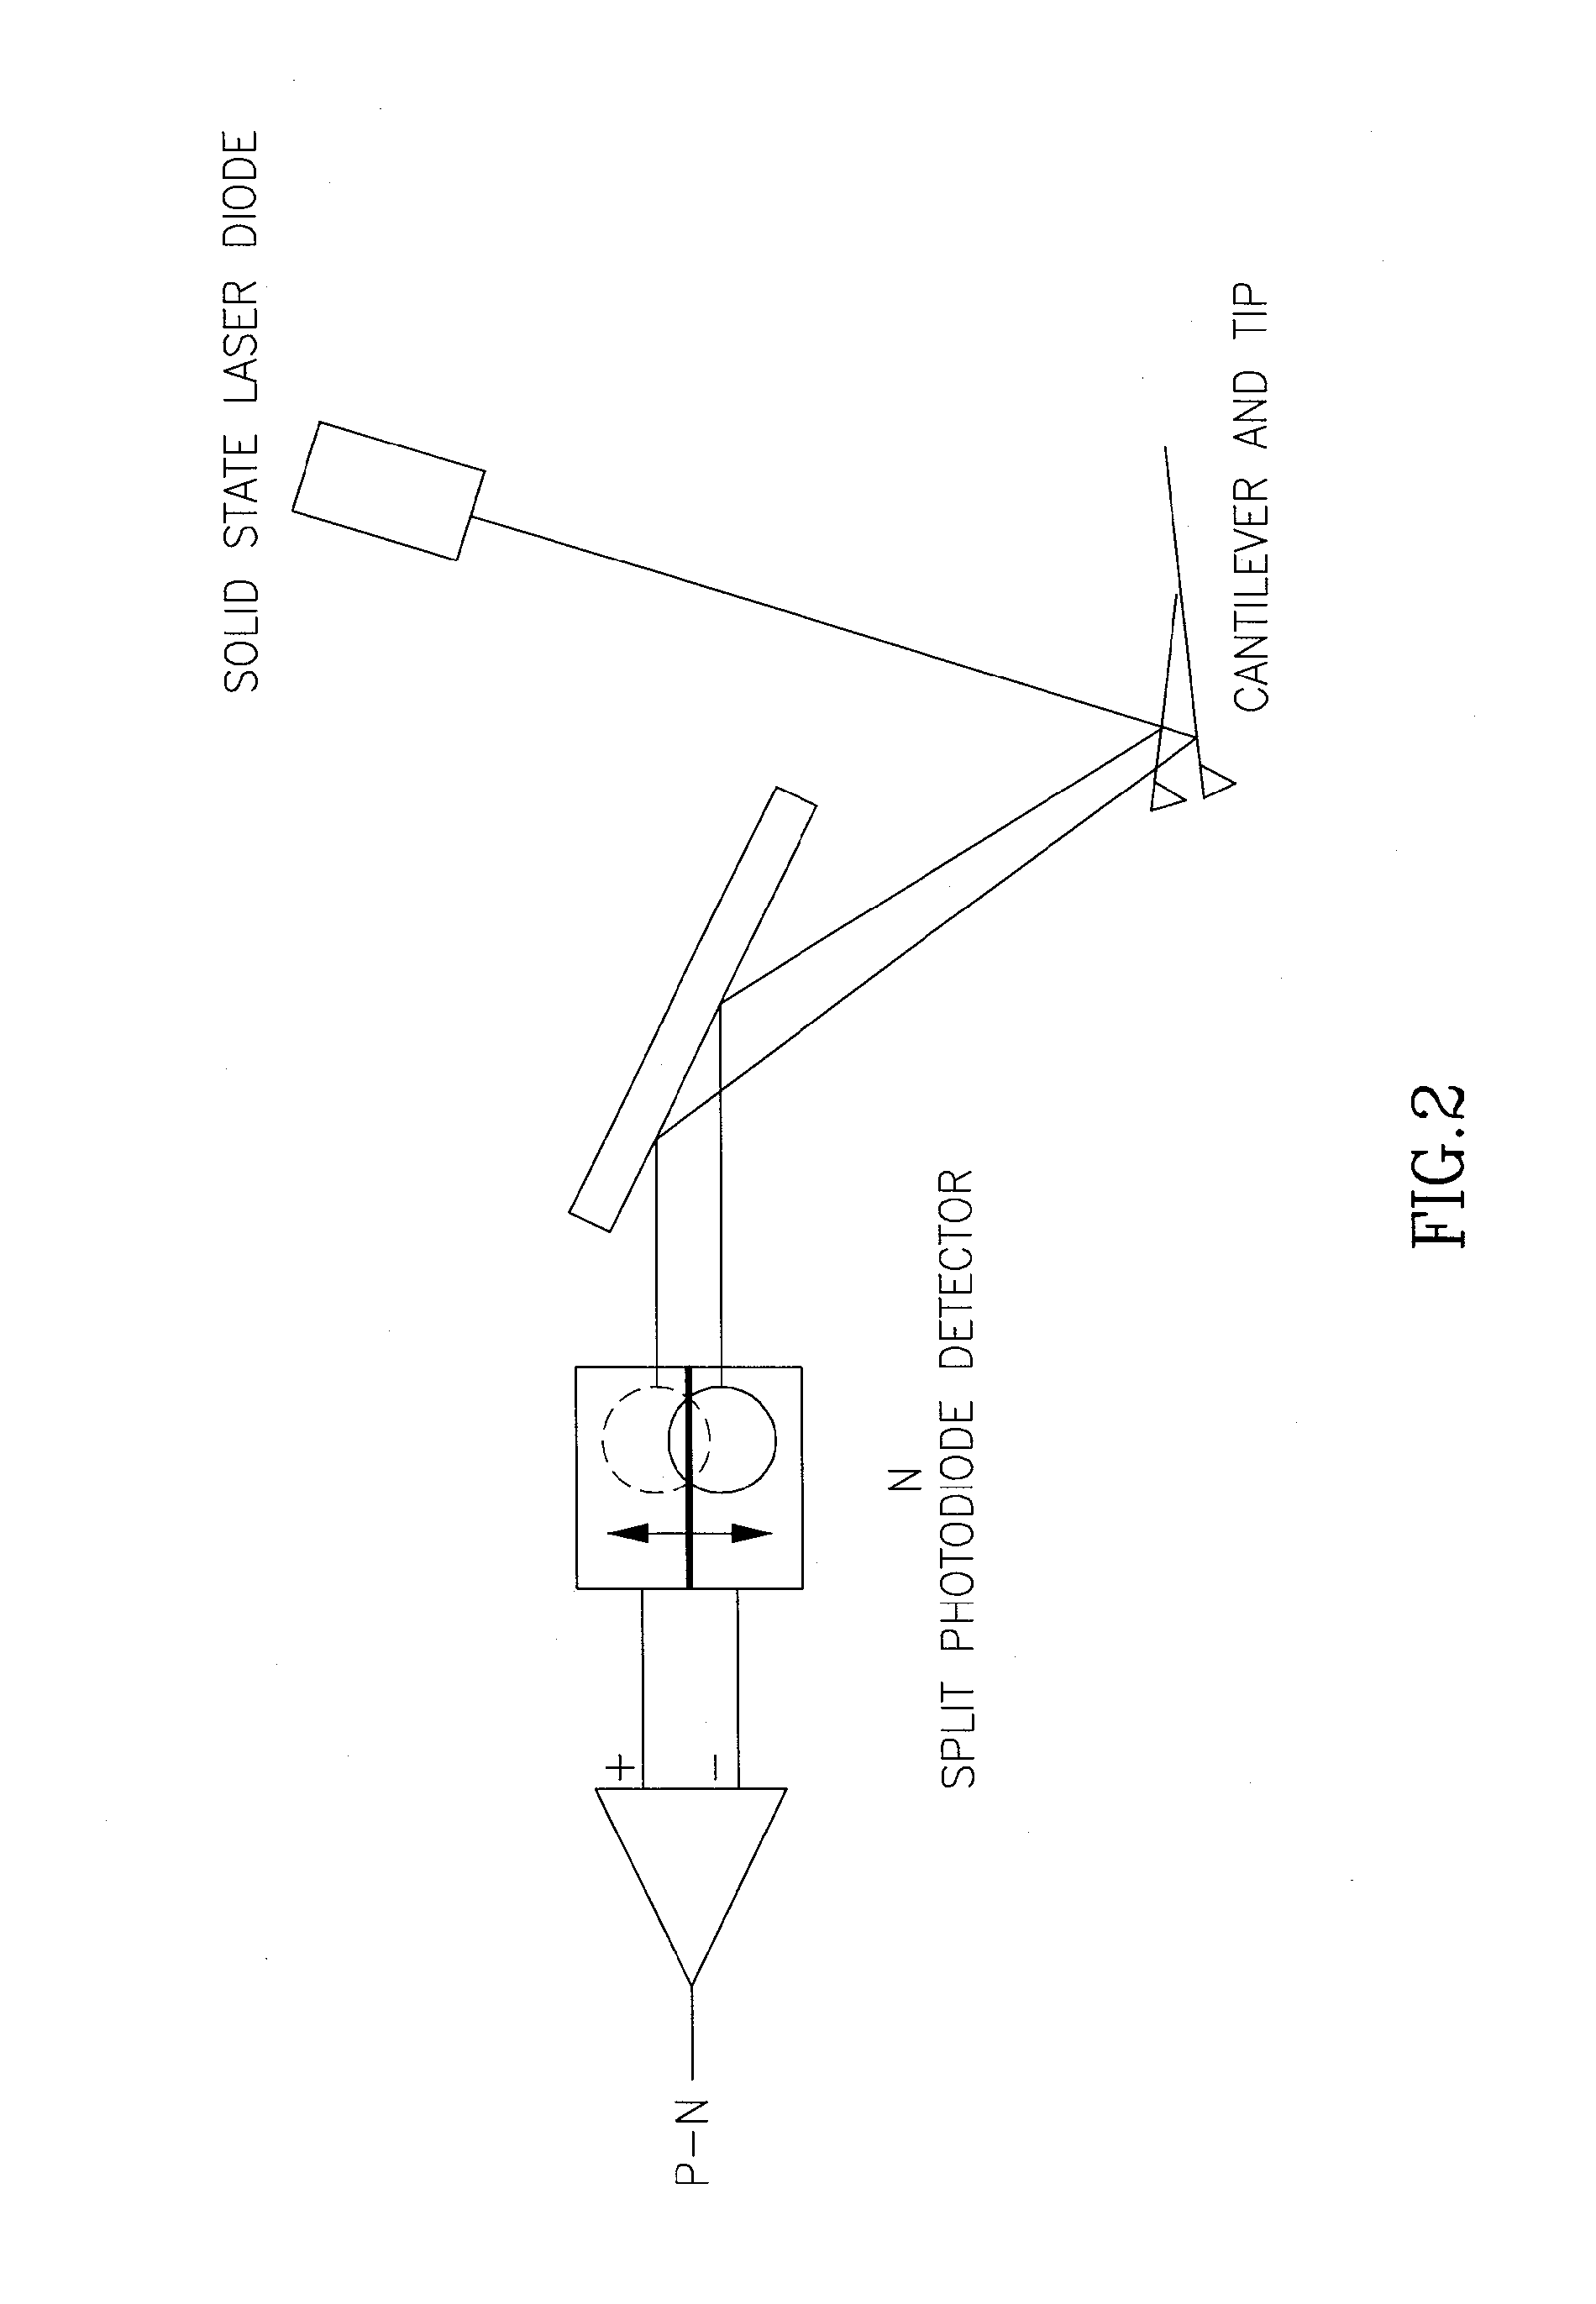 Optical knife-edge detector with large dynamic range